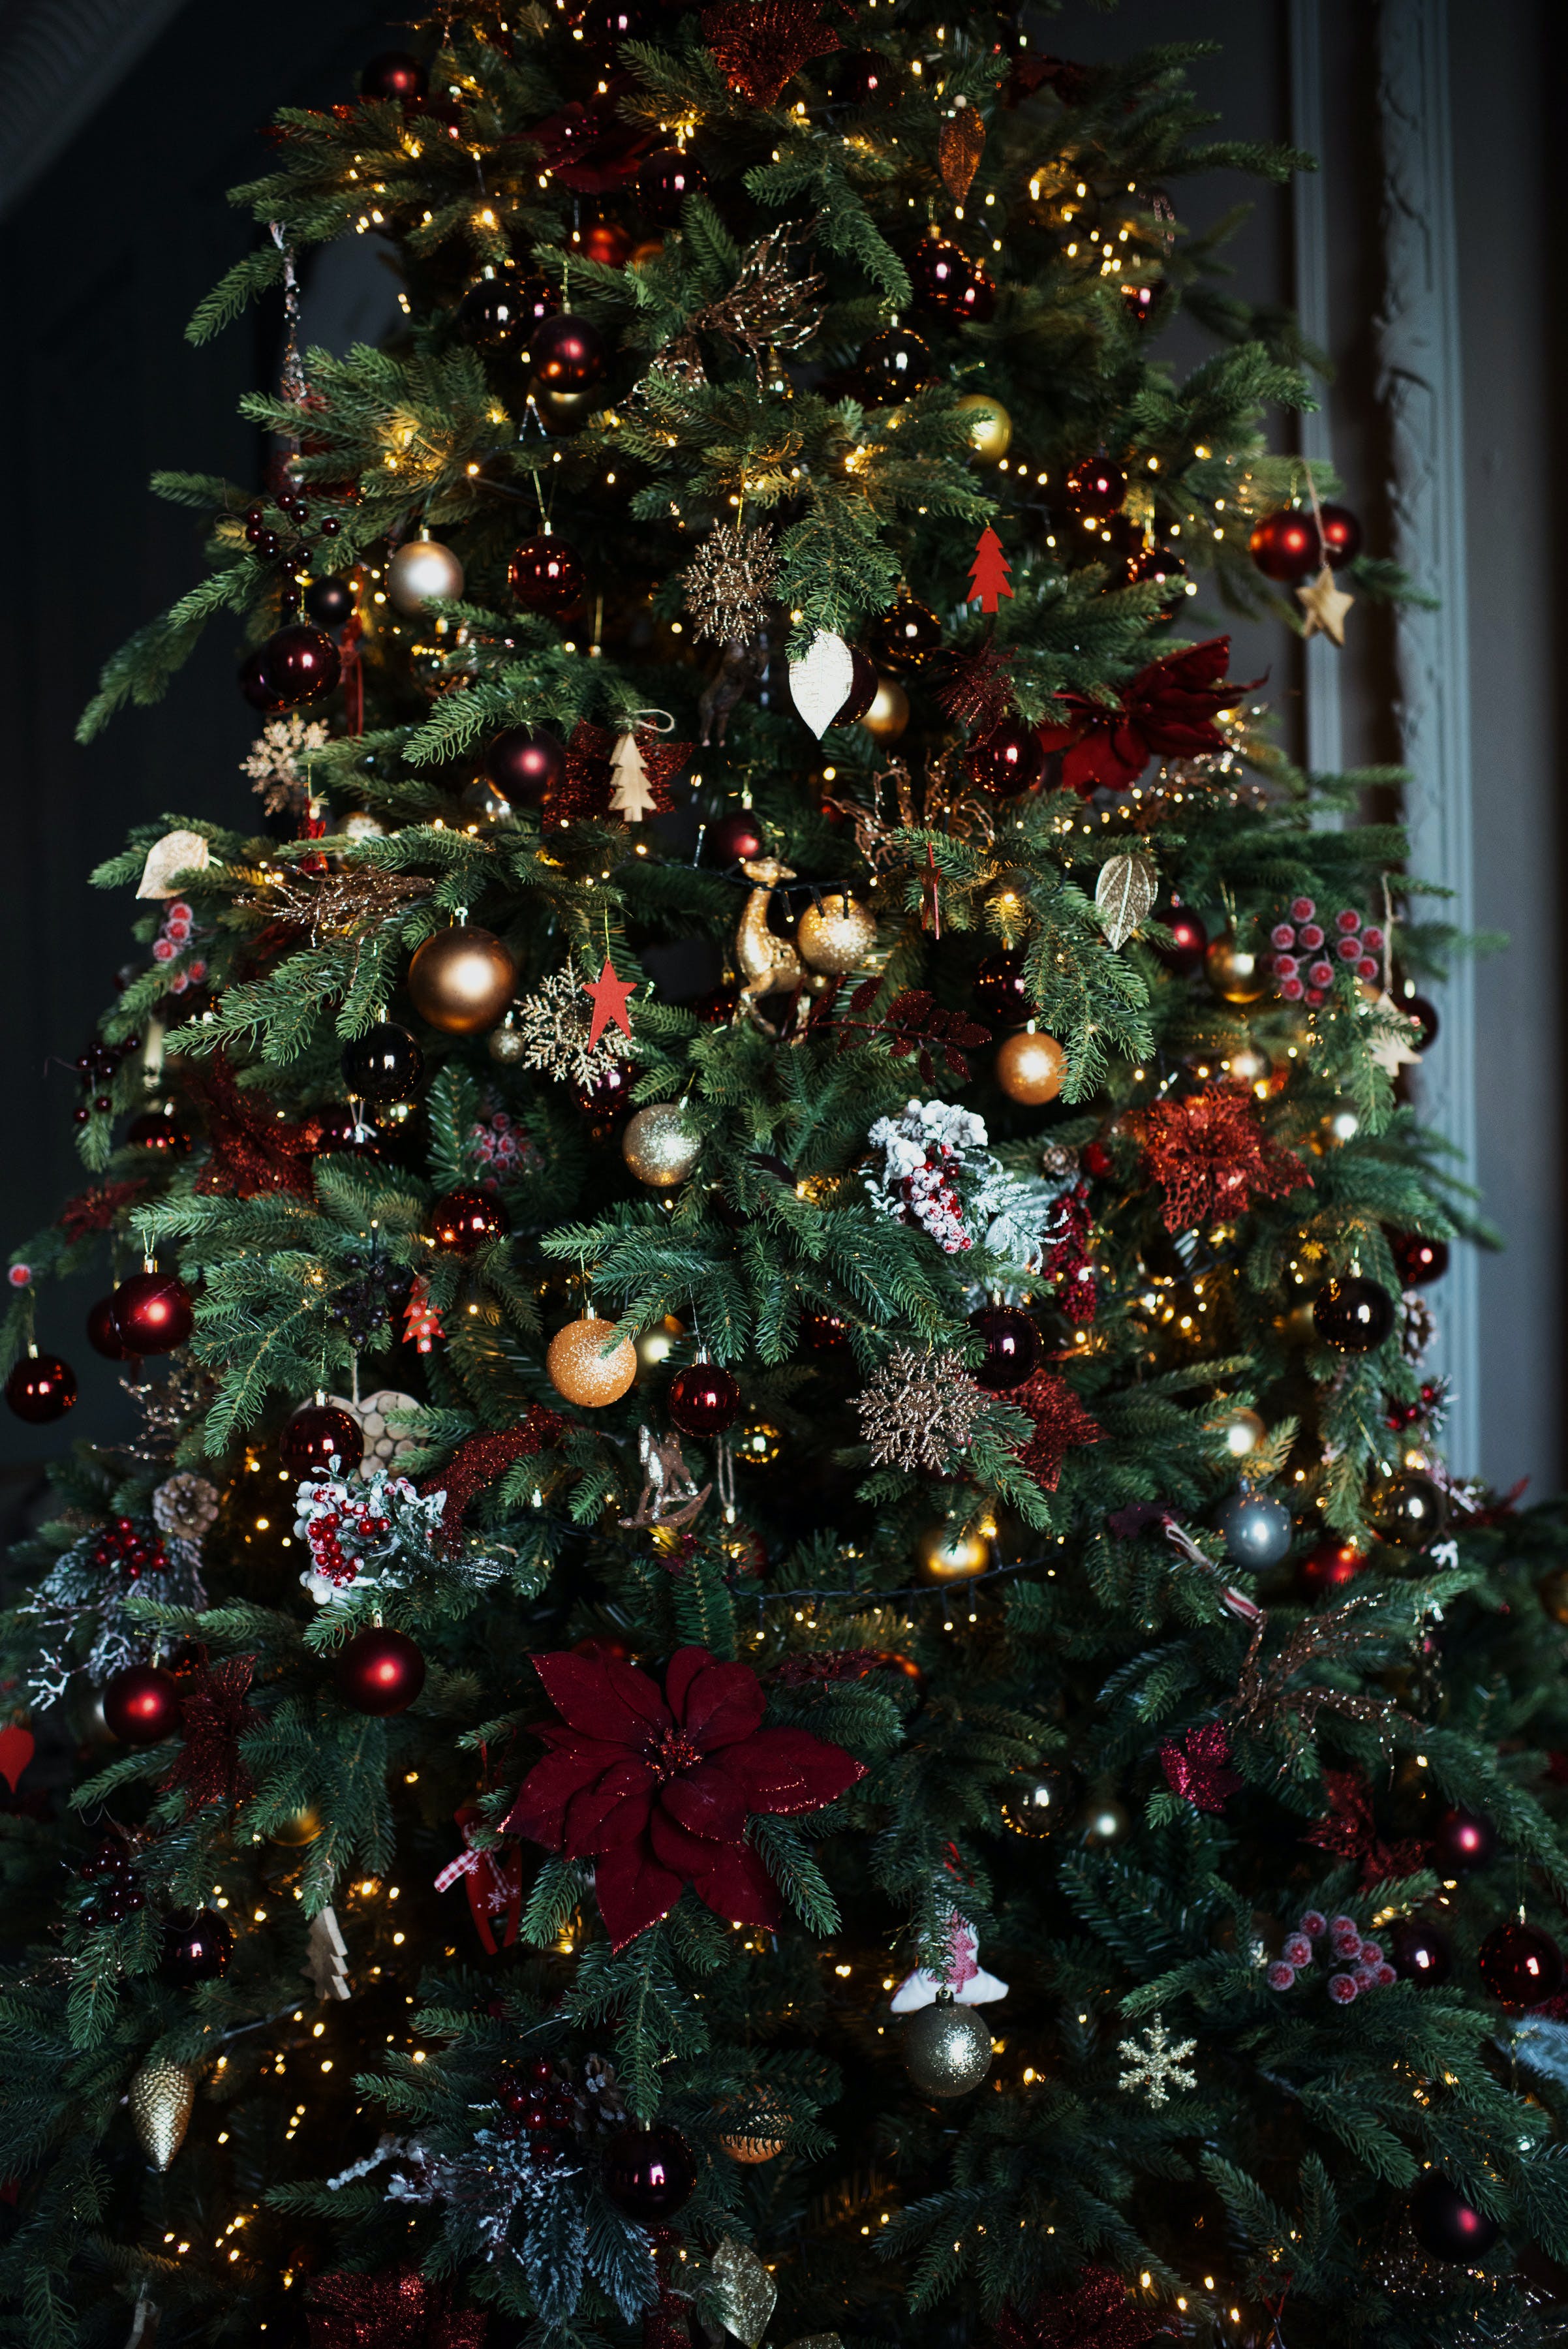 Christmas tree | Source: Pexels